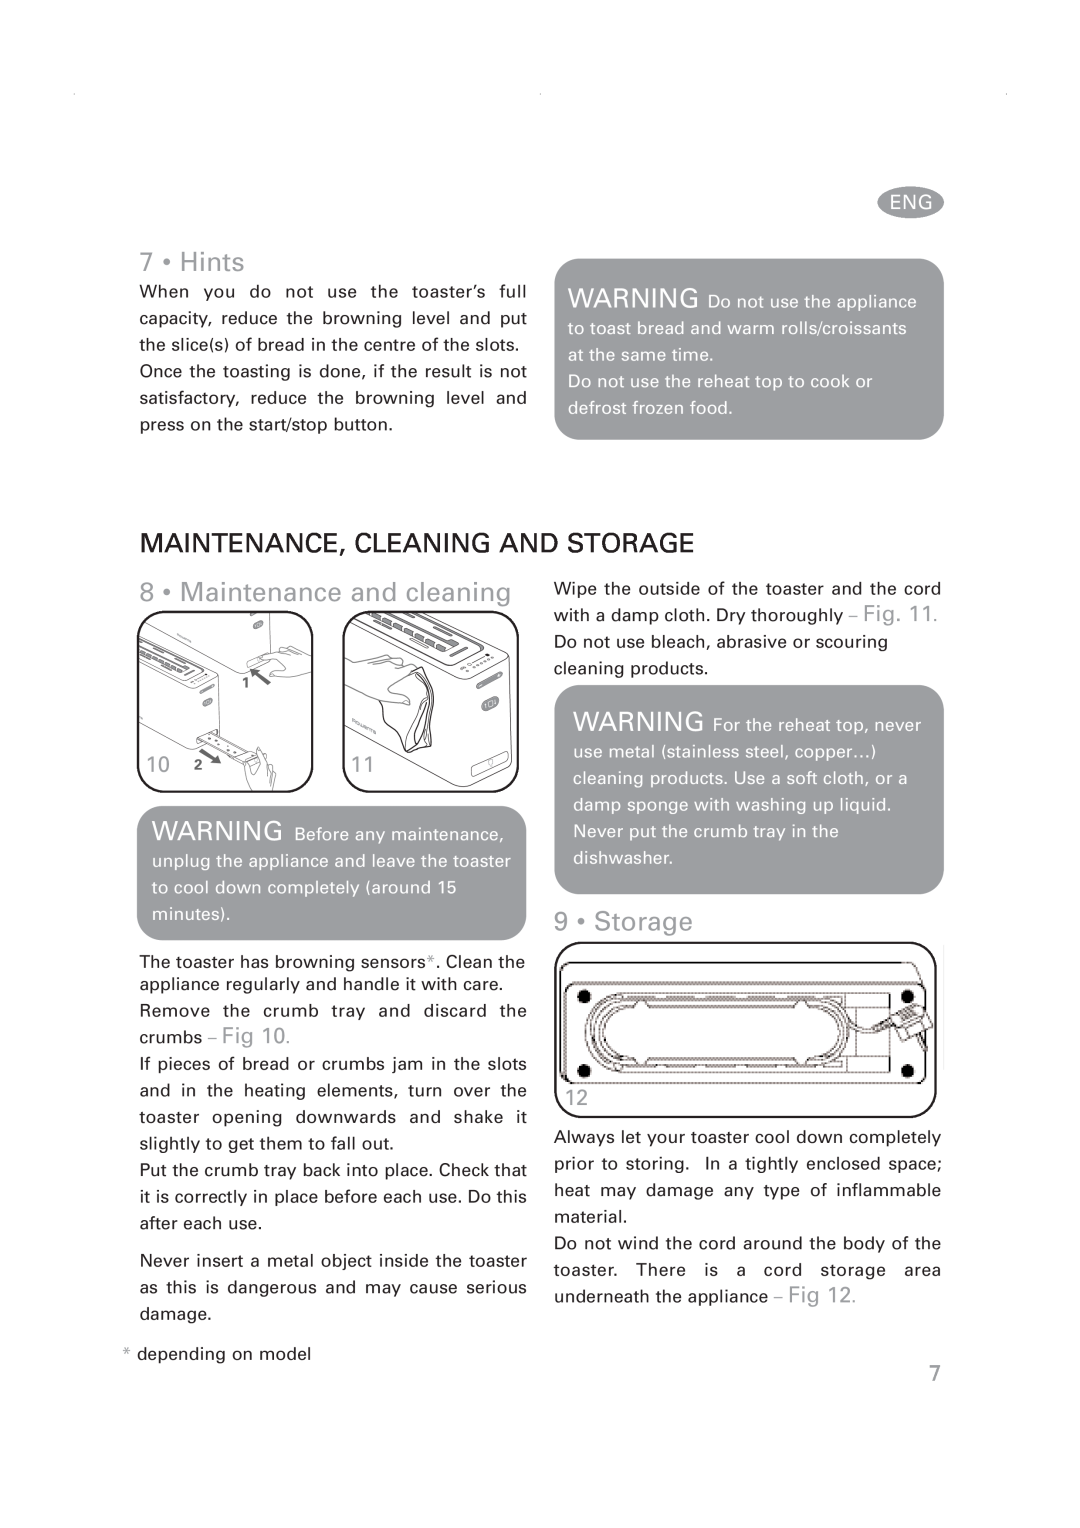 Rowenta Toaster manual Hints, Maintenance, Cleaning And Storage, Maintenance and cleaning 